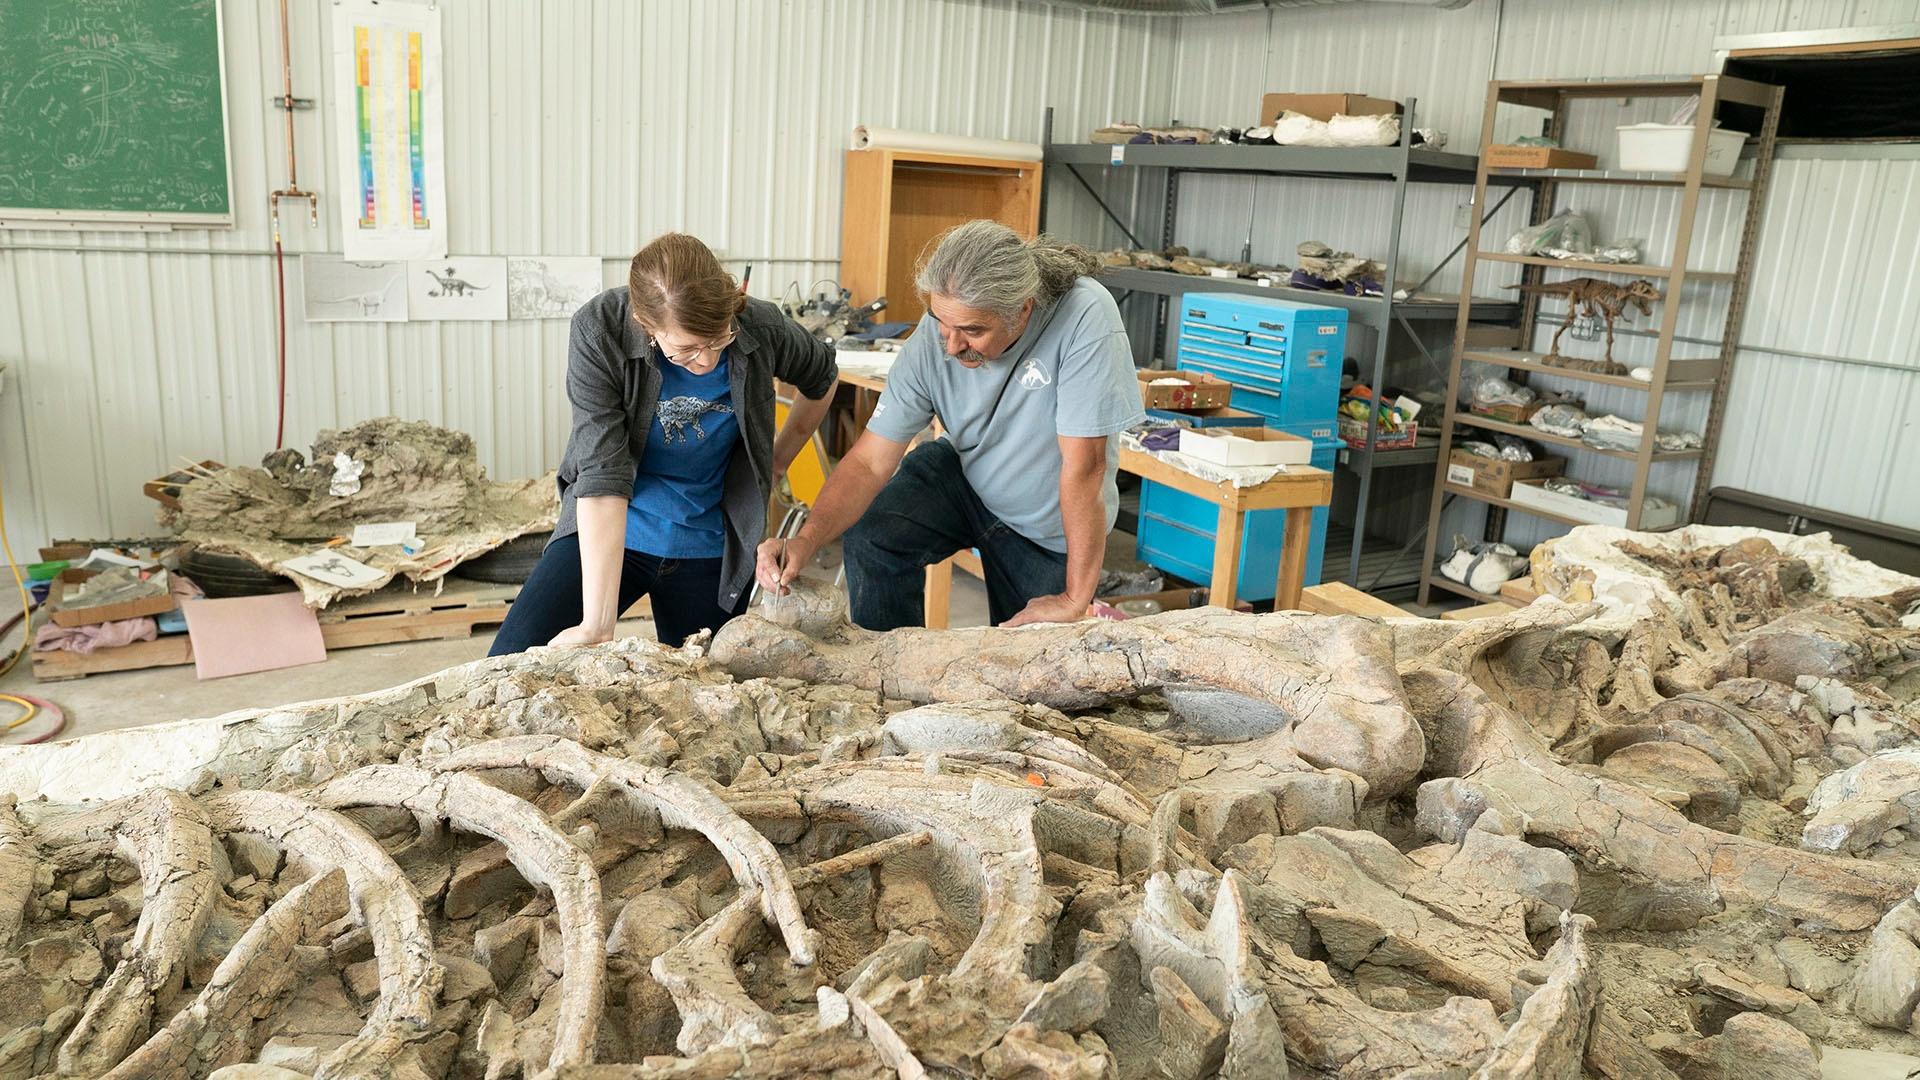 Prehistoric Road Trip host Emily Graslie and J.P. Cavigelli at Tate Geological Museum.